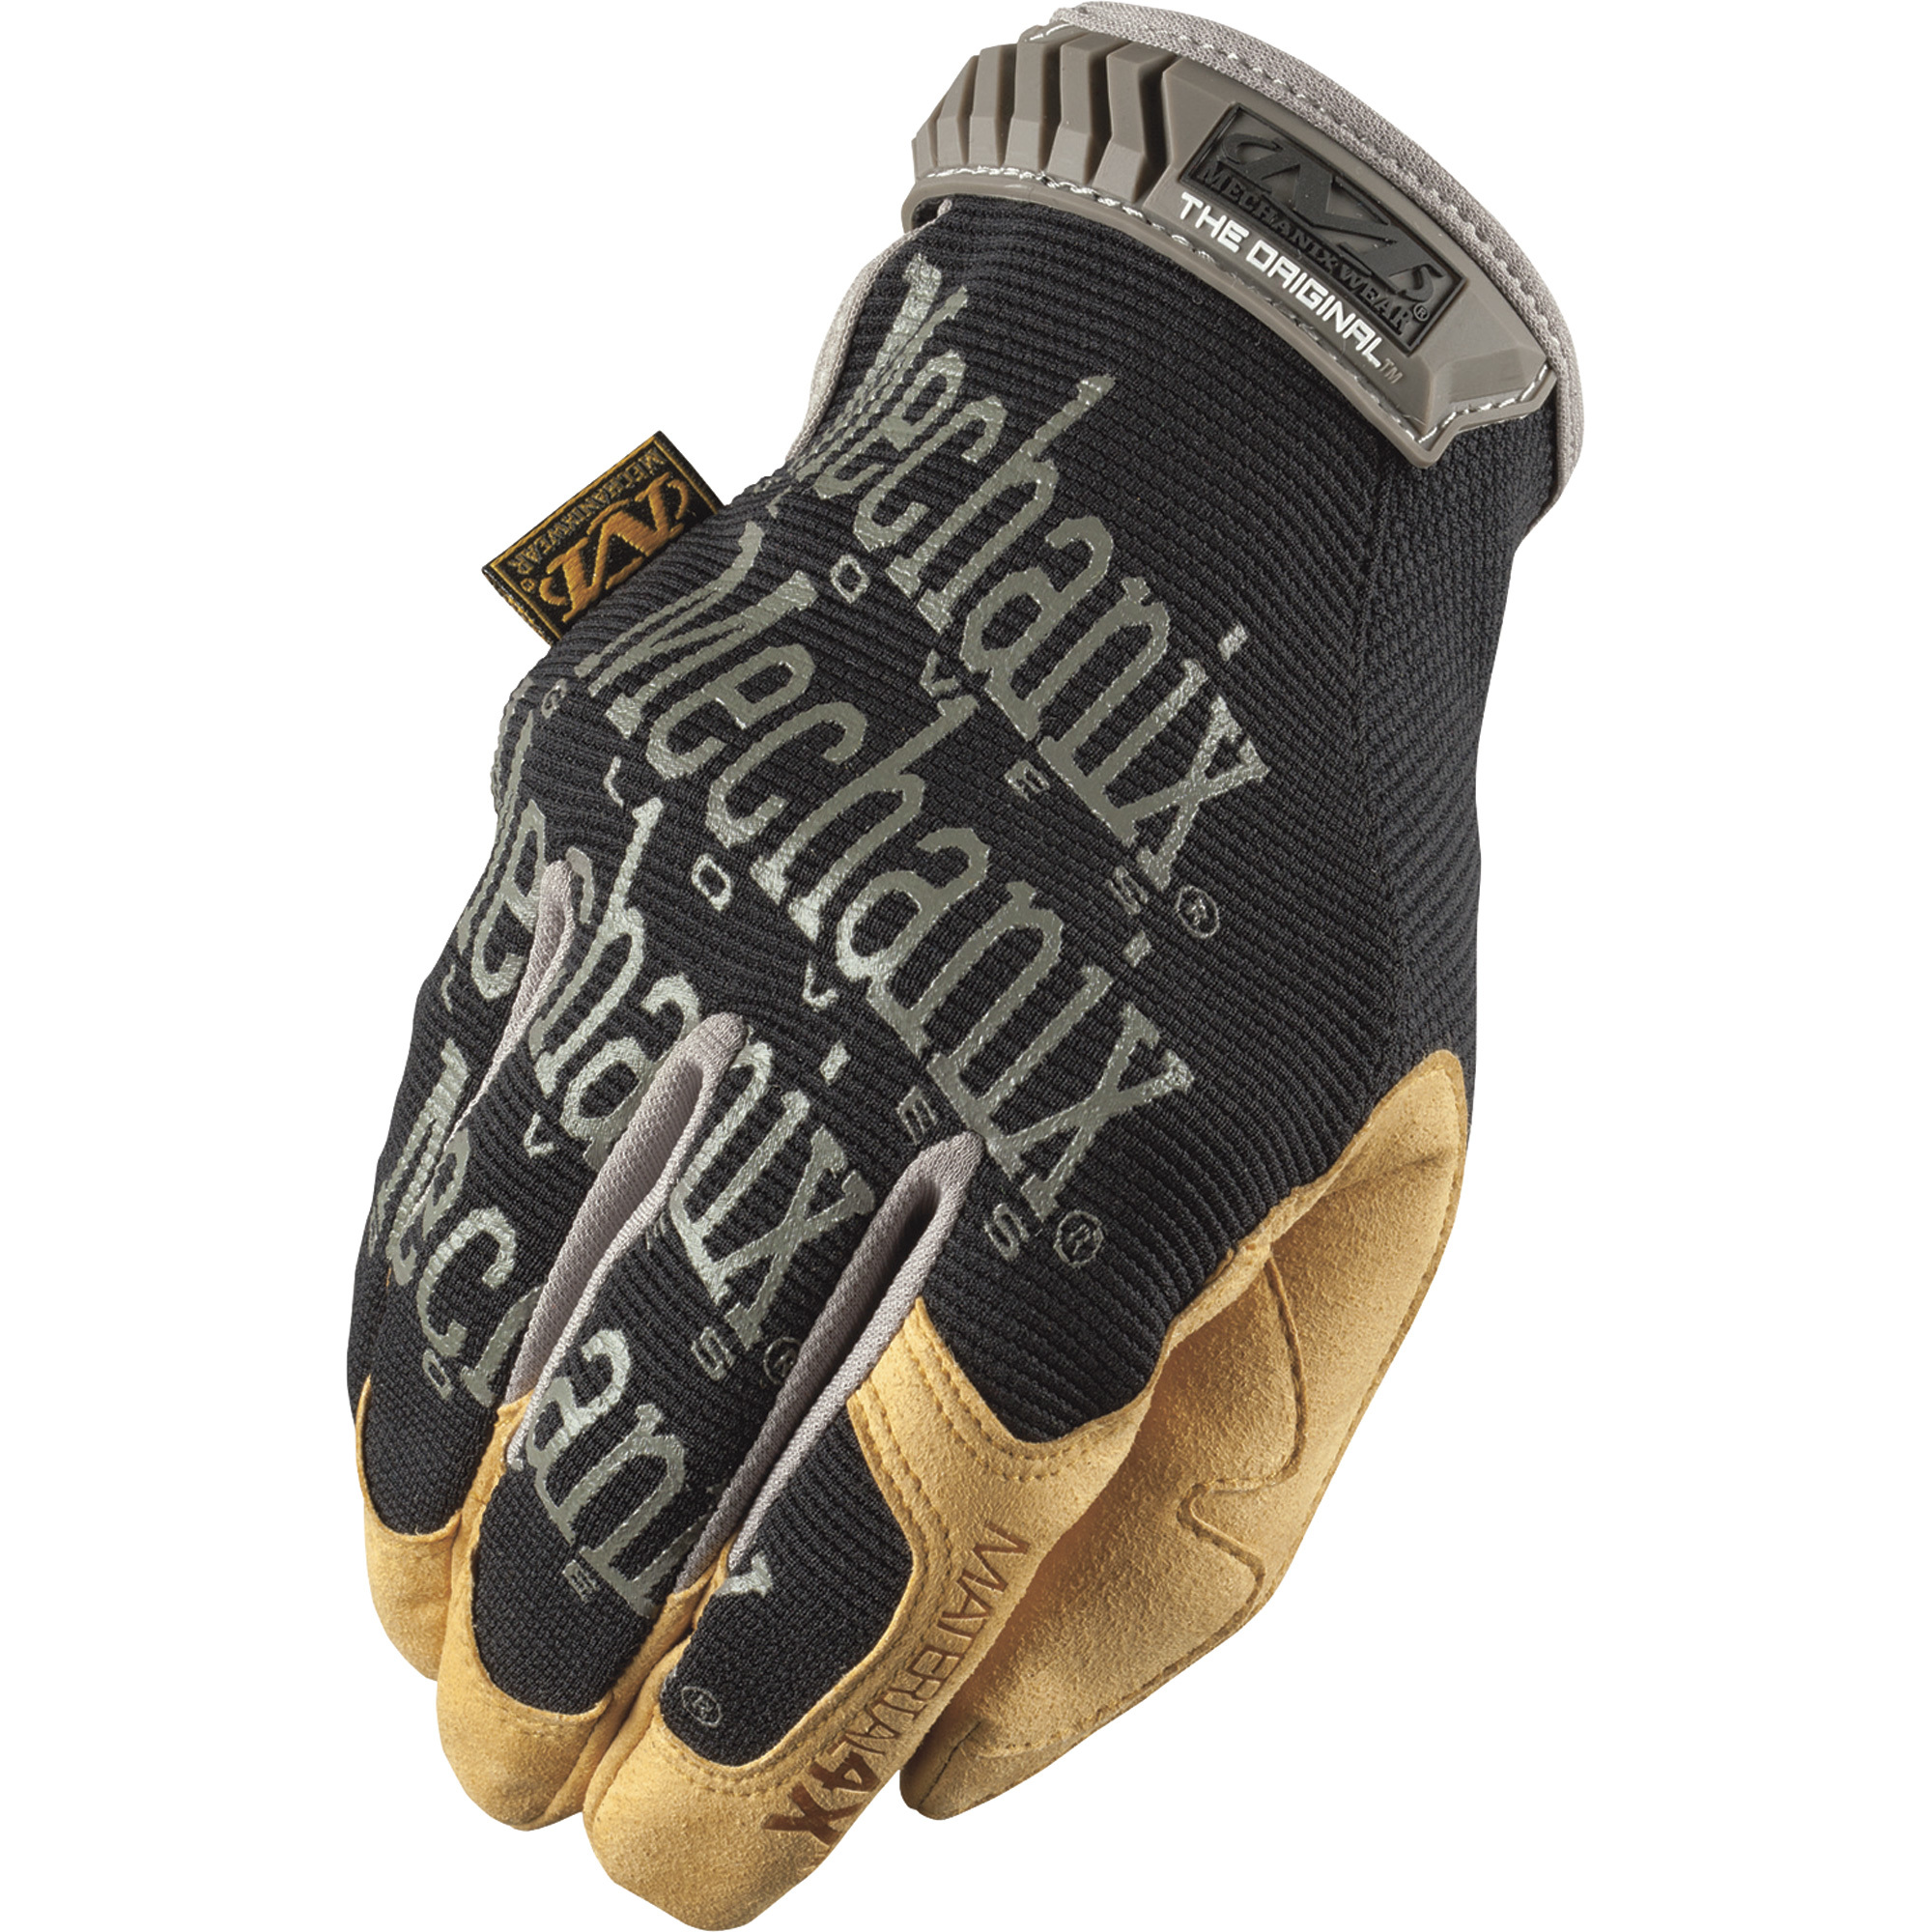 Mechanix Men's Wear Original Material 4X Gloves - Black & Tan, Small, Model MG4X-75